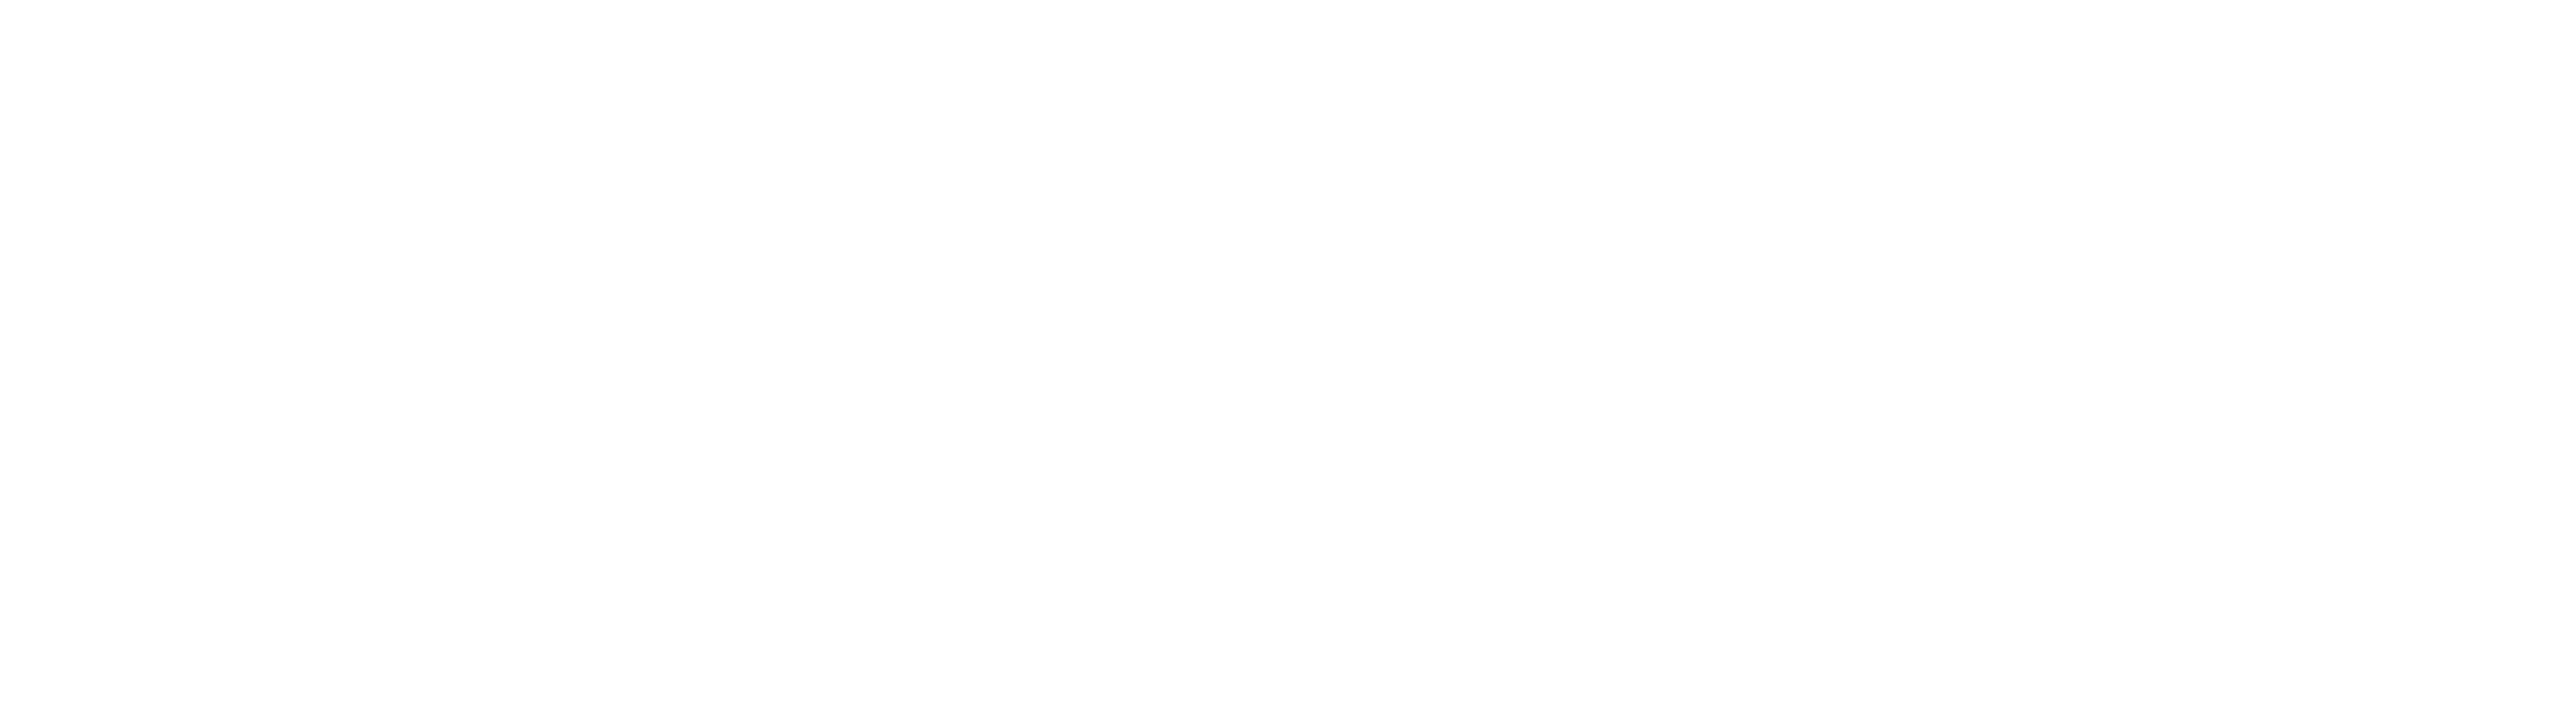 Fondos Next Generation